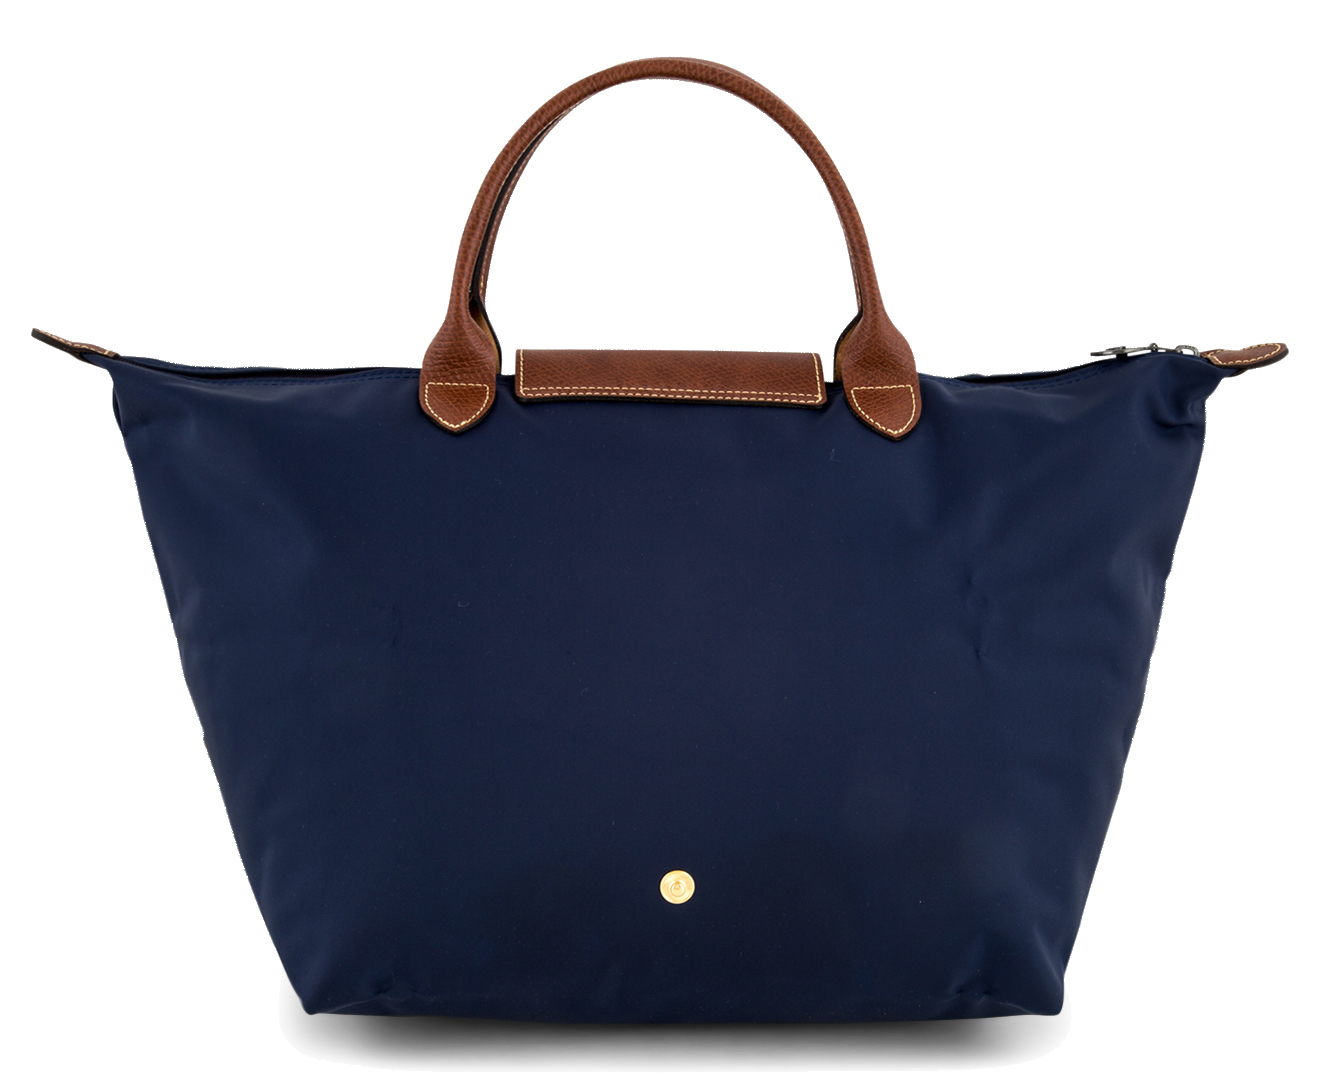 Longchamp Medium Le Pliage Top Handle Handbag - Navy | Catch.com.au